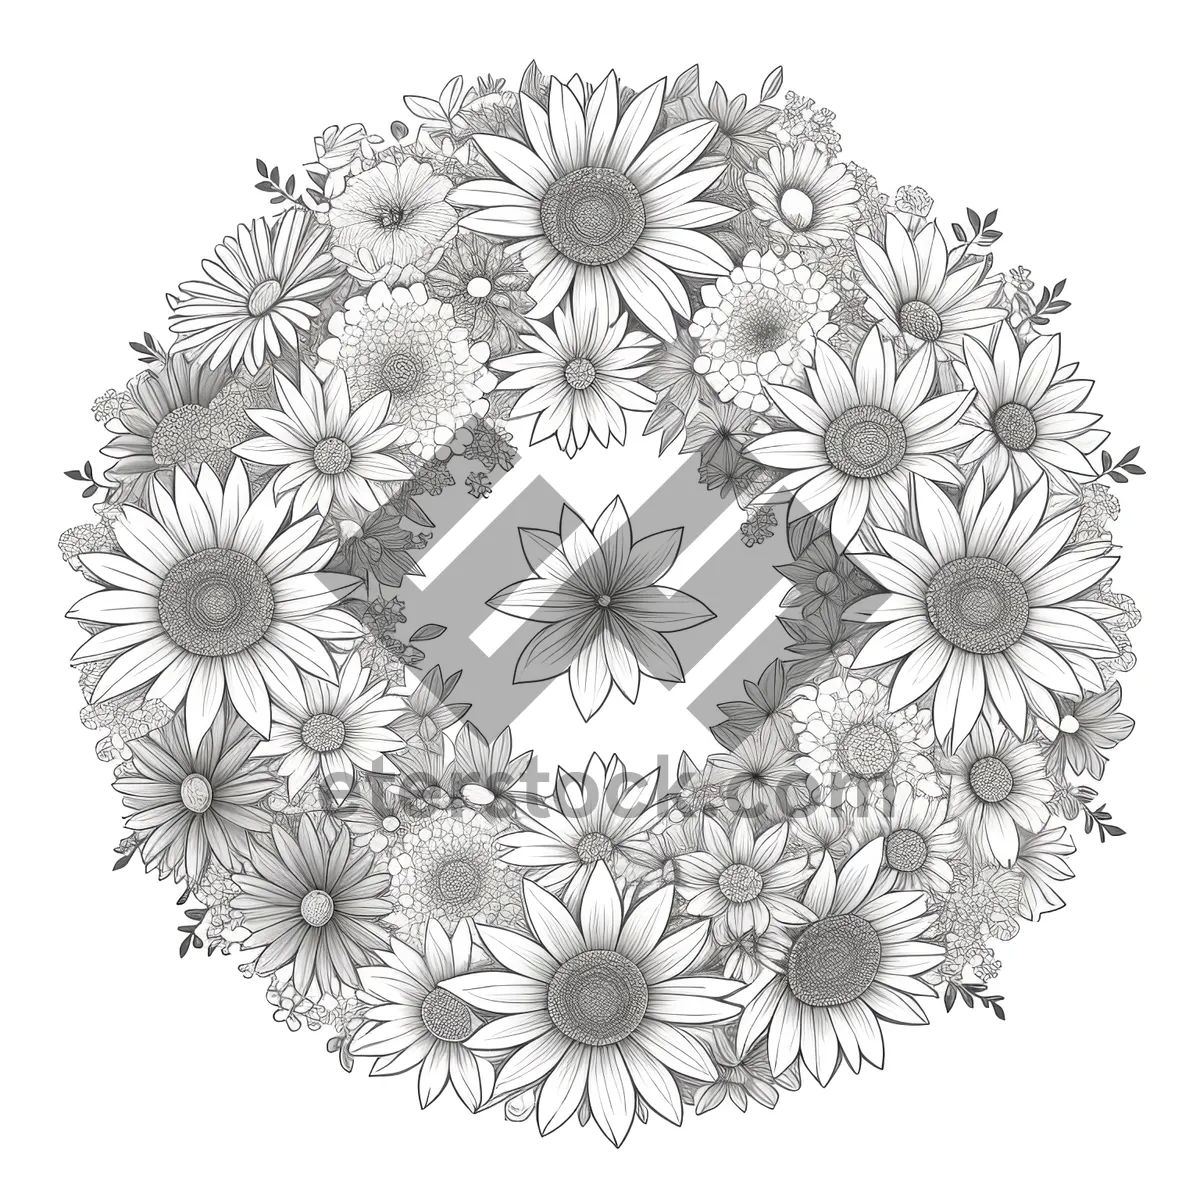 Picture of Frozen Floral Snowflake Design - Decorative Winter Element